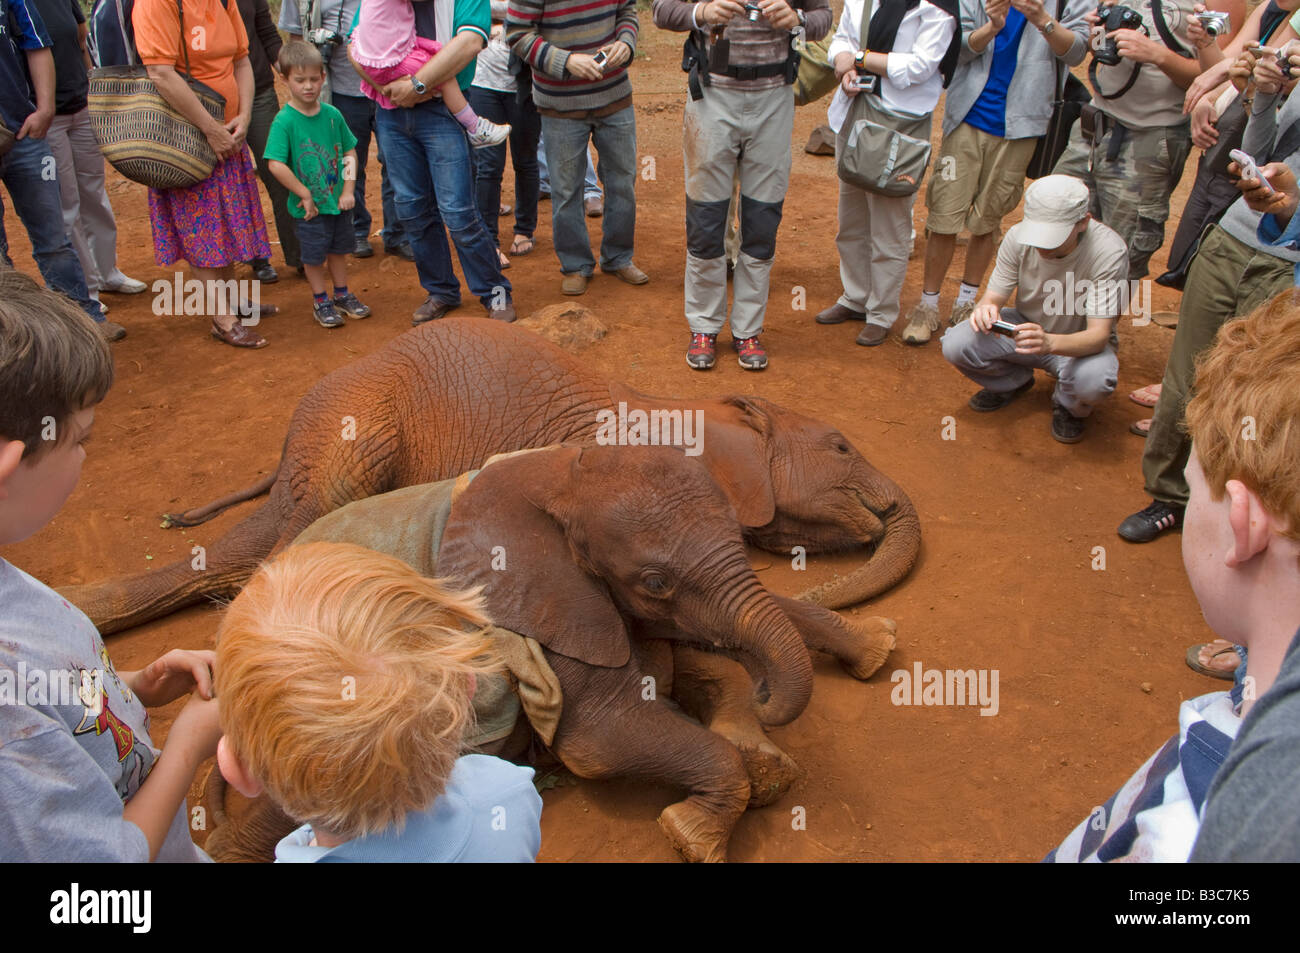 Kenya, Nairobi, David Sheldrick Wildlife Trust. Tourists watch the young elephants take their daily dust bath at the elephant orphanage. Stock Photo